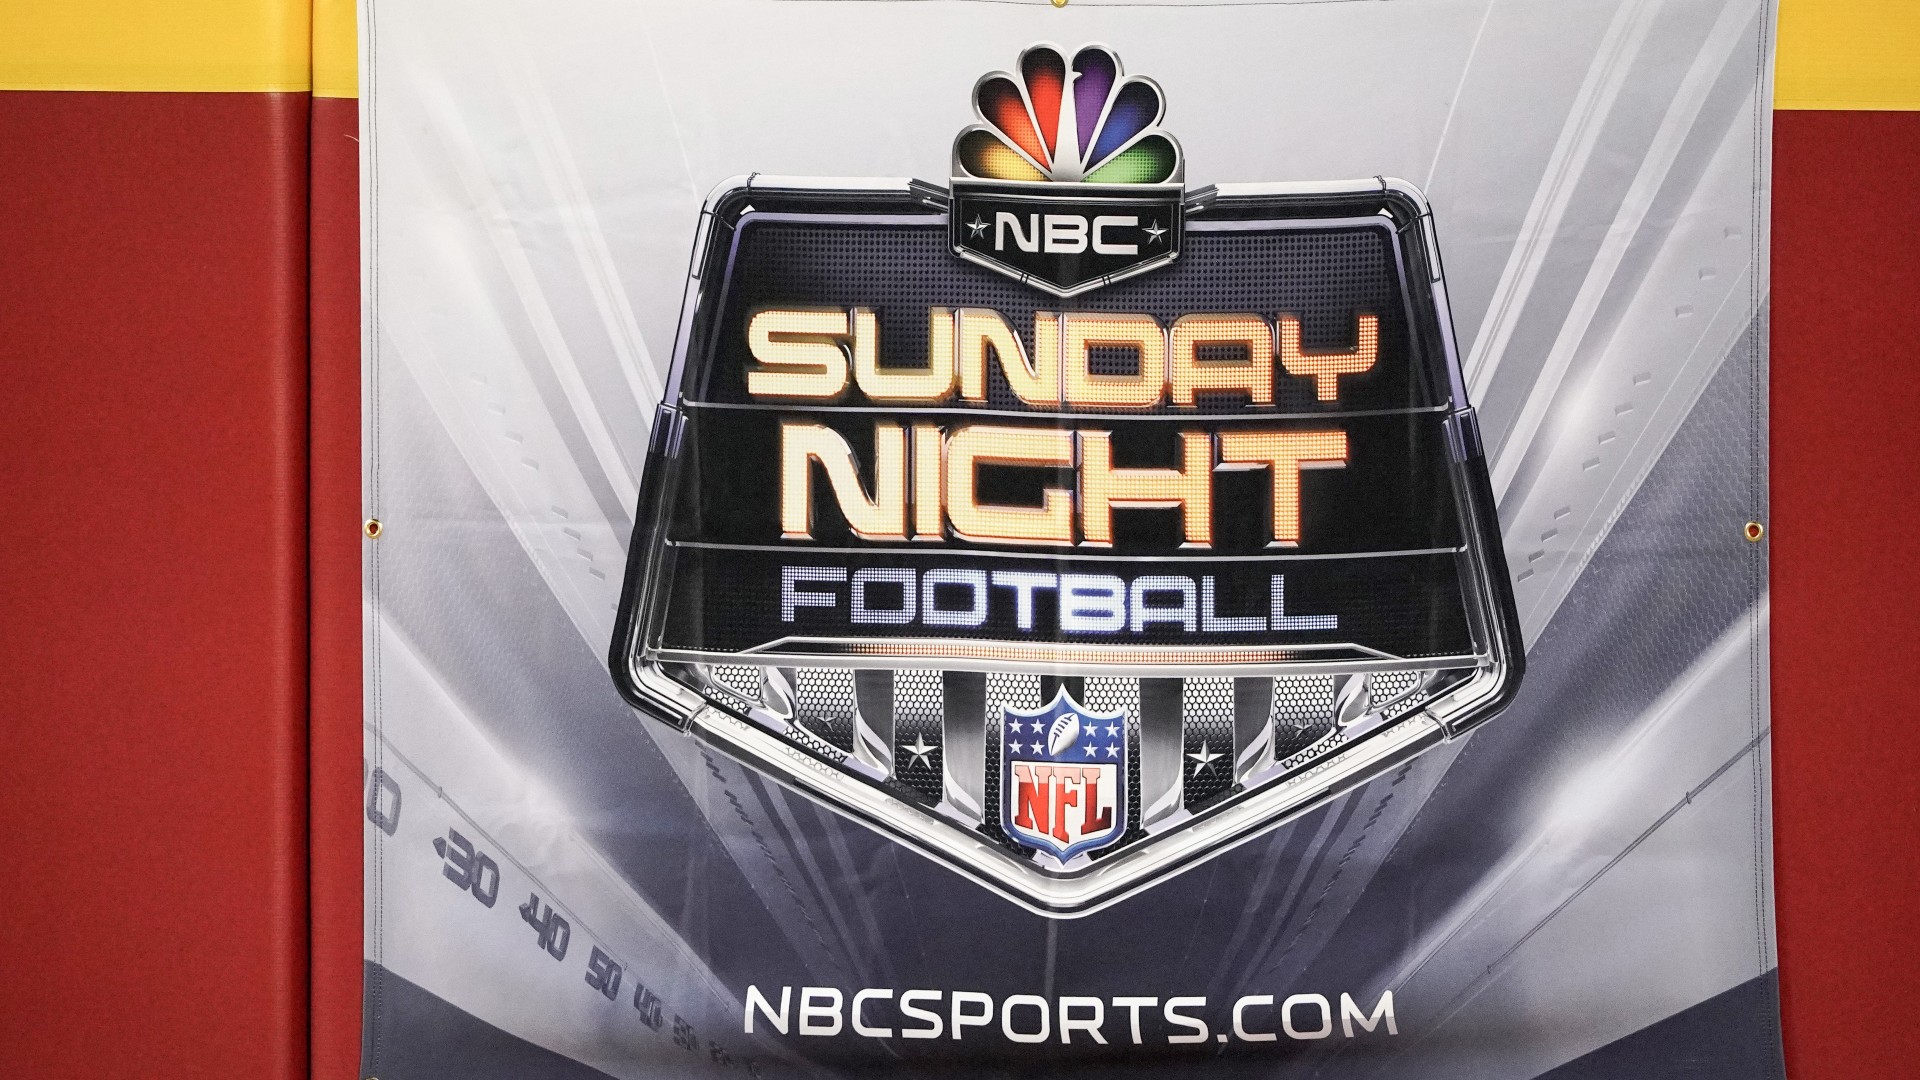 Sunday Night Football on NBC - Next week on Sunday Night Football!